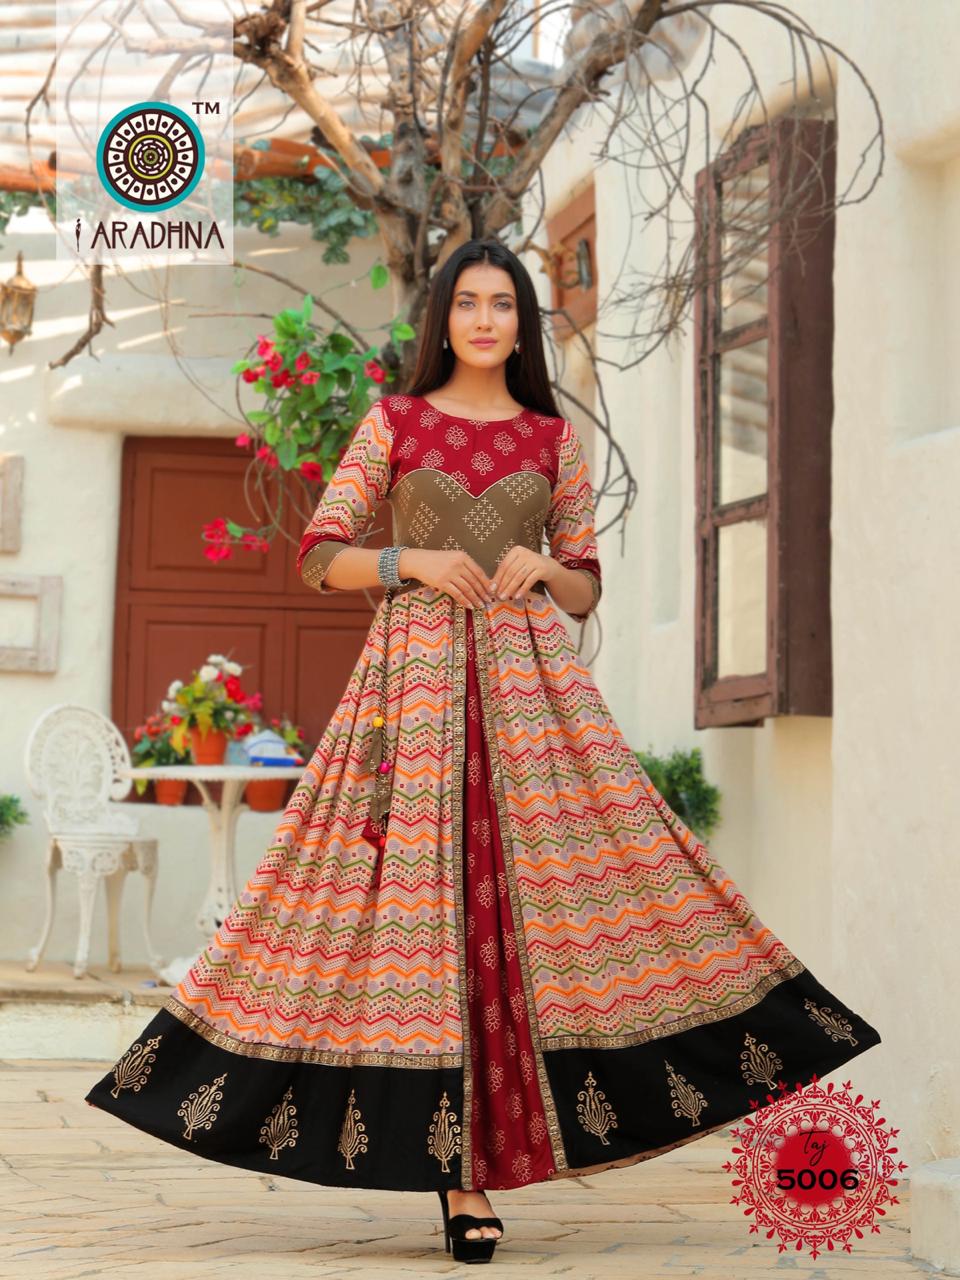 Aradhna Presents Taj Vol-5 Heavy Rayon With Embroidery Work Gown Style Kurtis Catalog Wholesaler